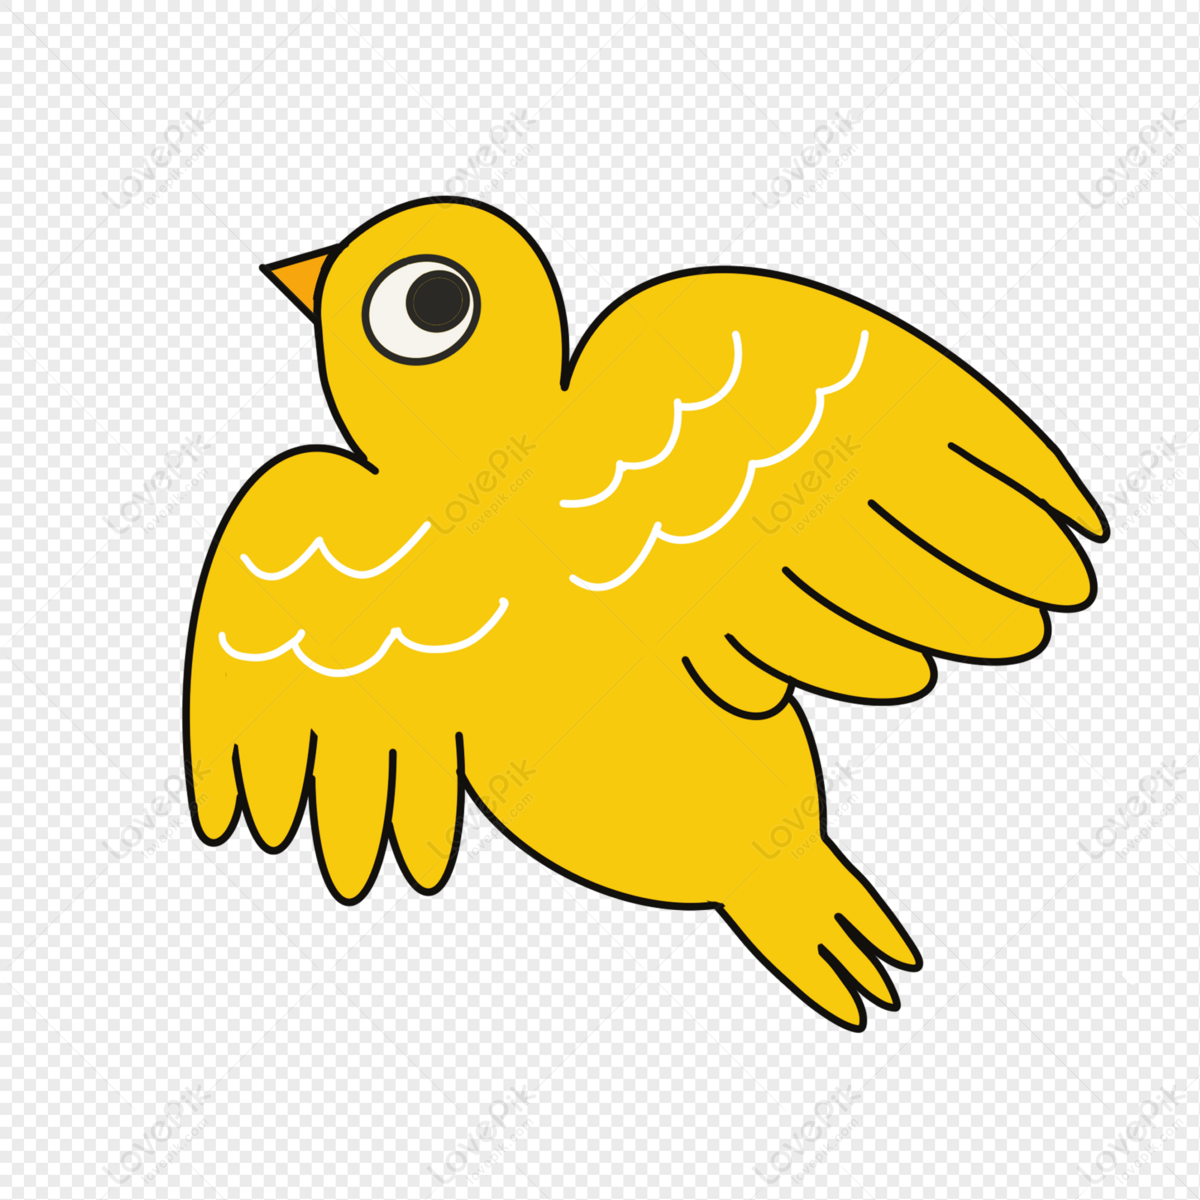 yellow birds clipart